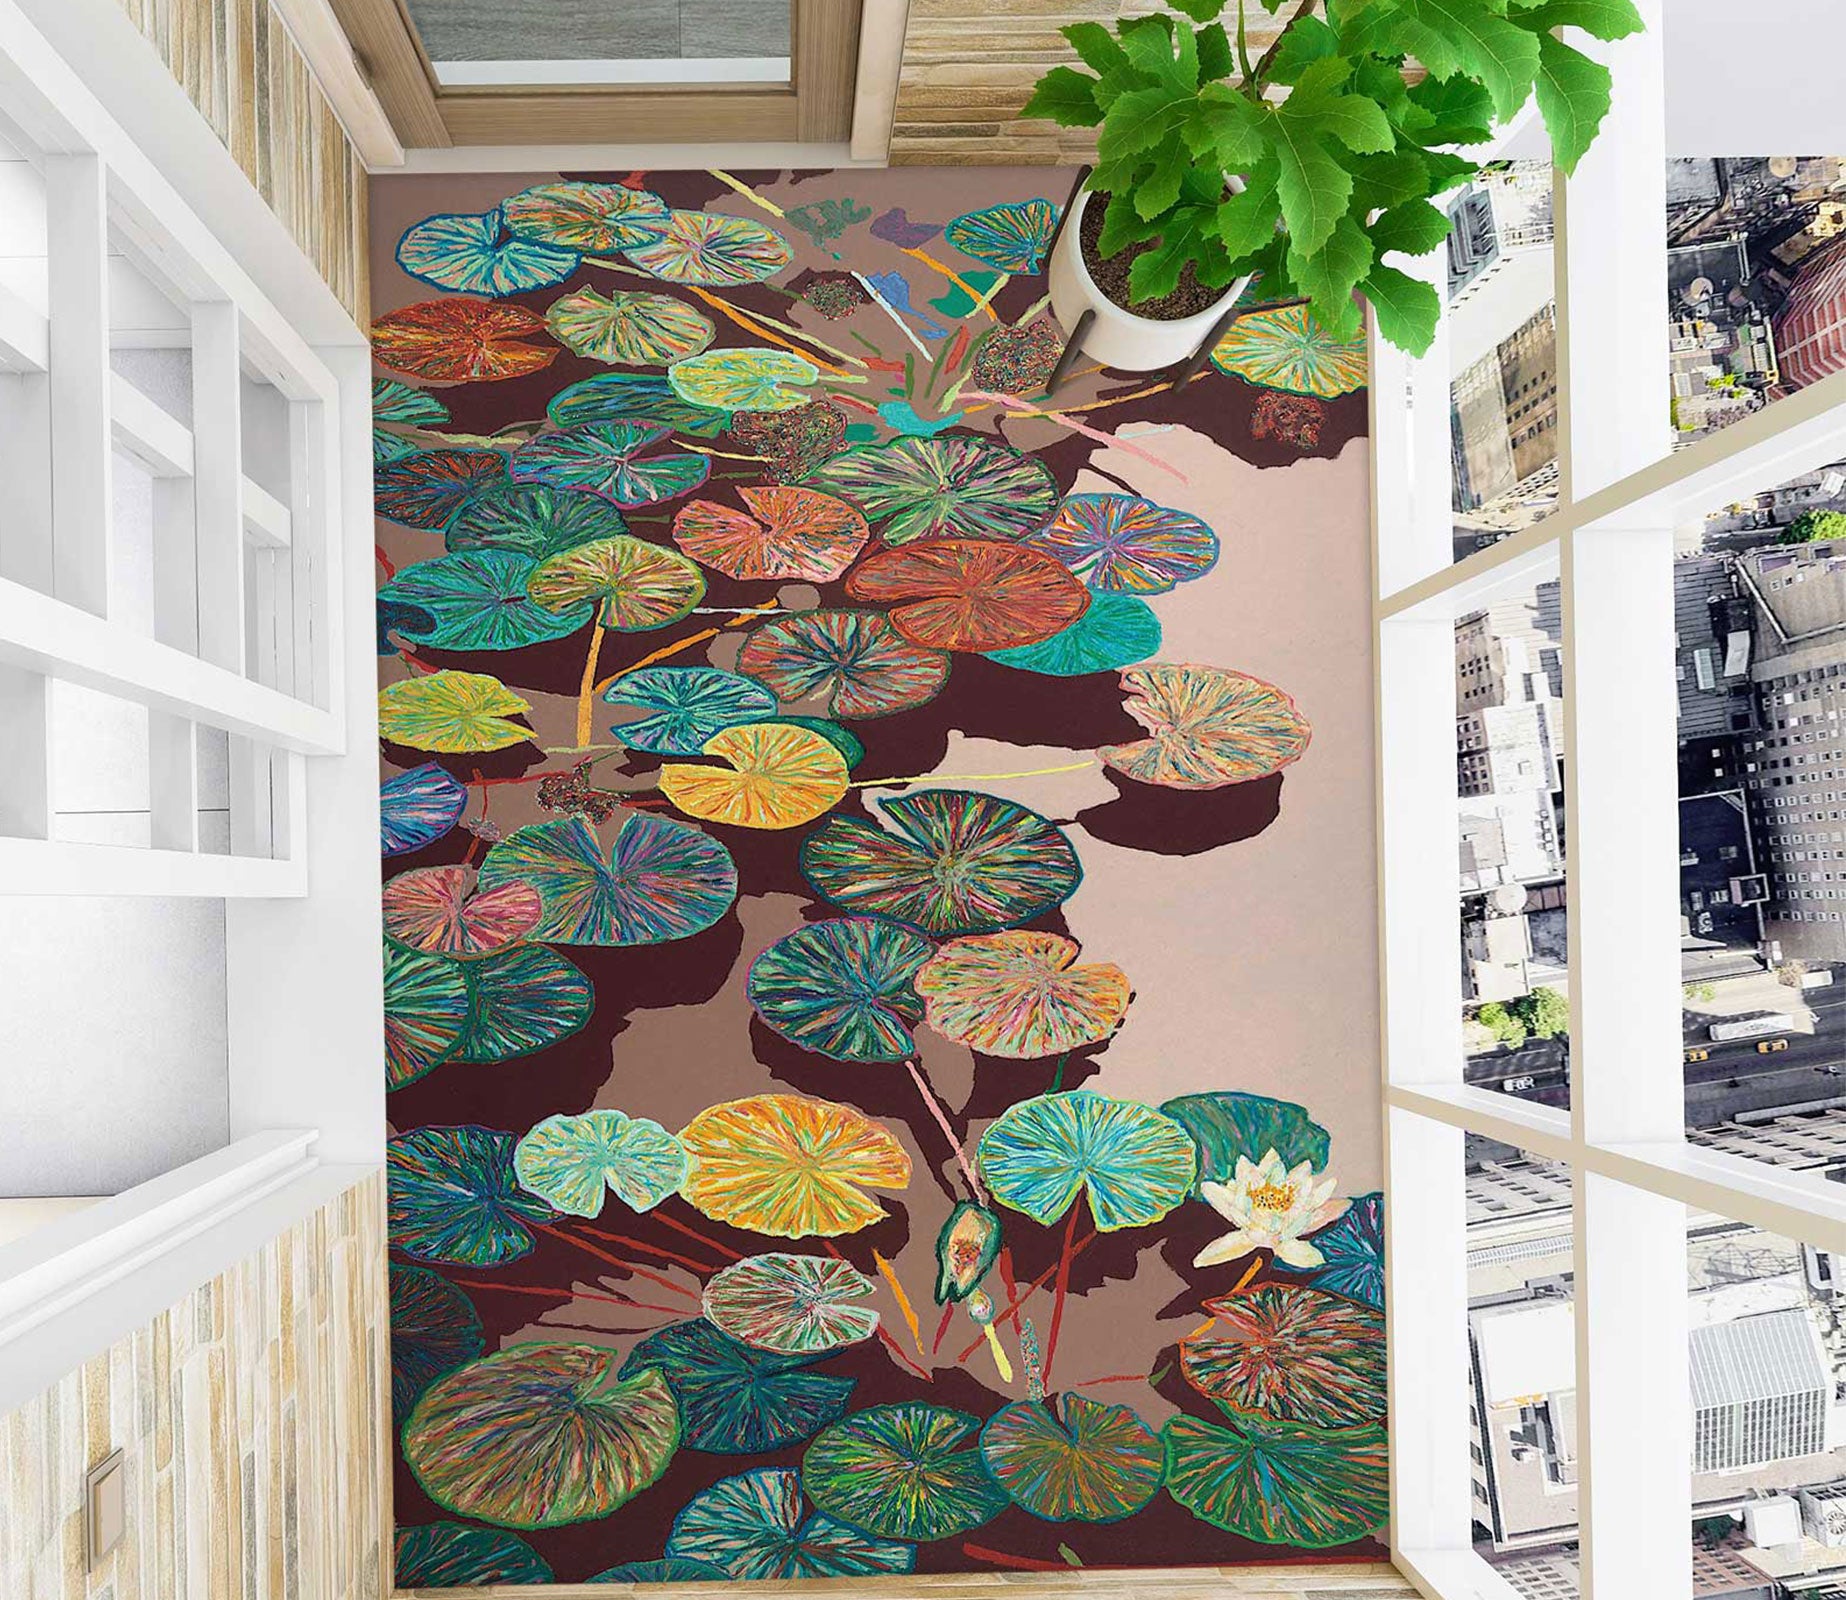 3D Lotus Pond Leaf Pattern 96116 Allan P. Friedlander Floor Mural  Wallpaper Murals Self-Adhesive Removable Print Epoxy